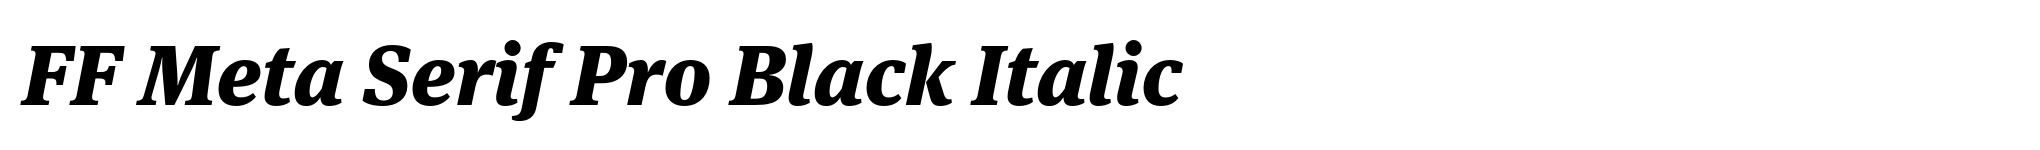 FF Meta Serif Pro Black Italic image